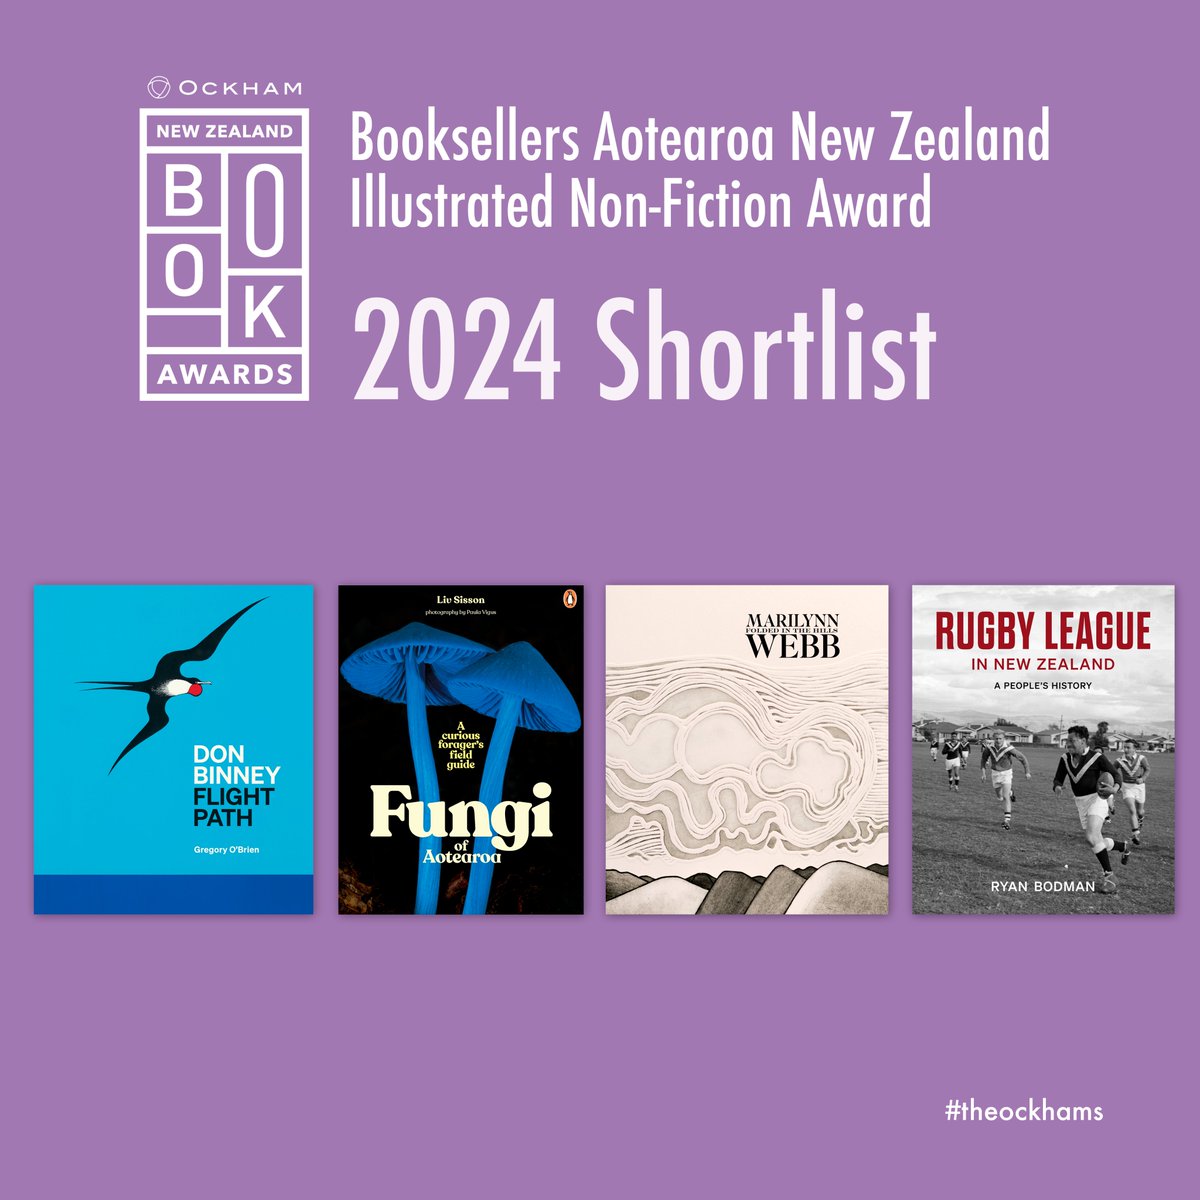 'Don Binney: Flight Path' by Gregory O'Brien is a finalist in the 2024 New Zealand Book Awards! #theockhams @theockhams